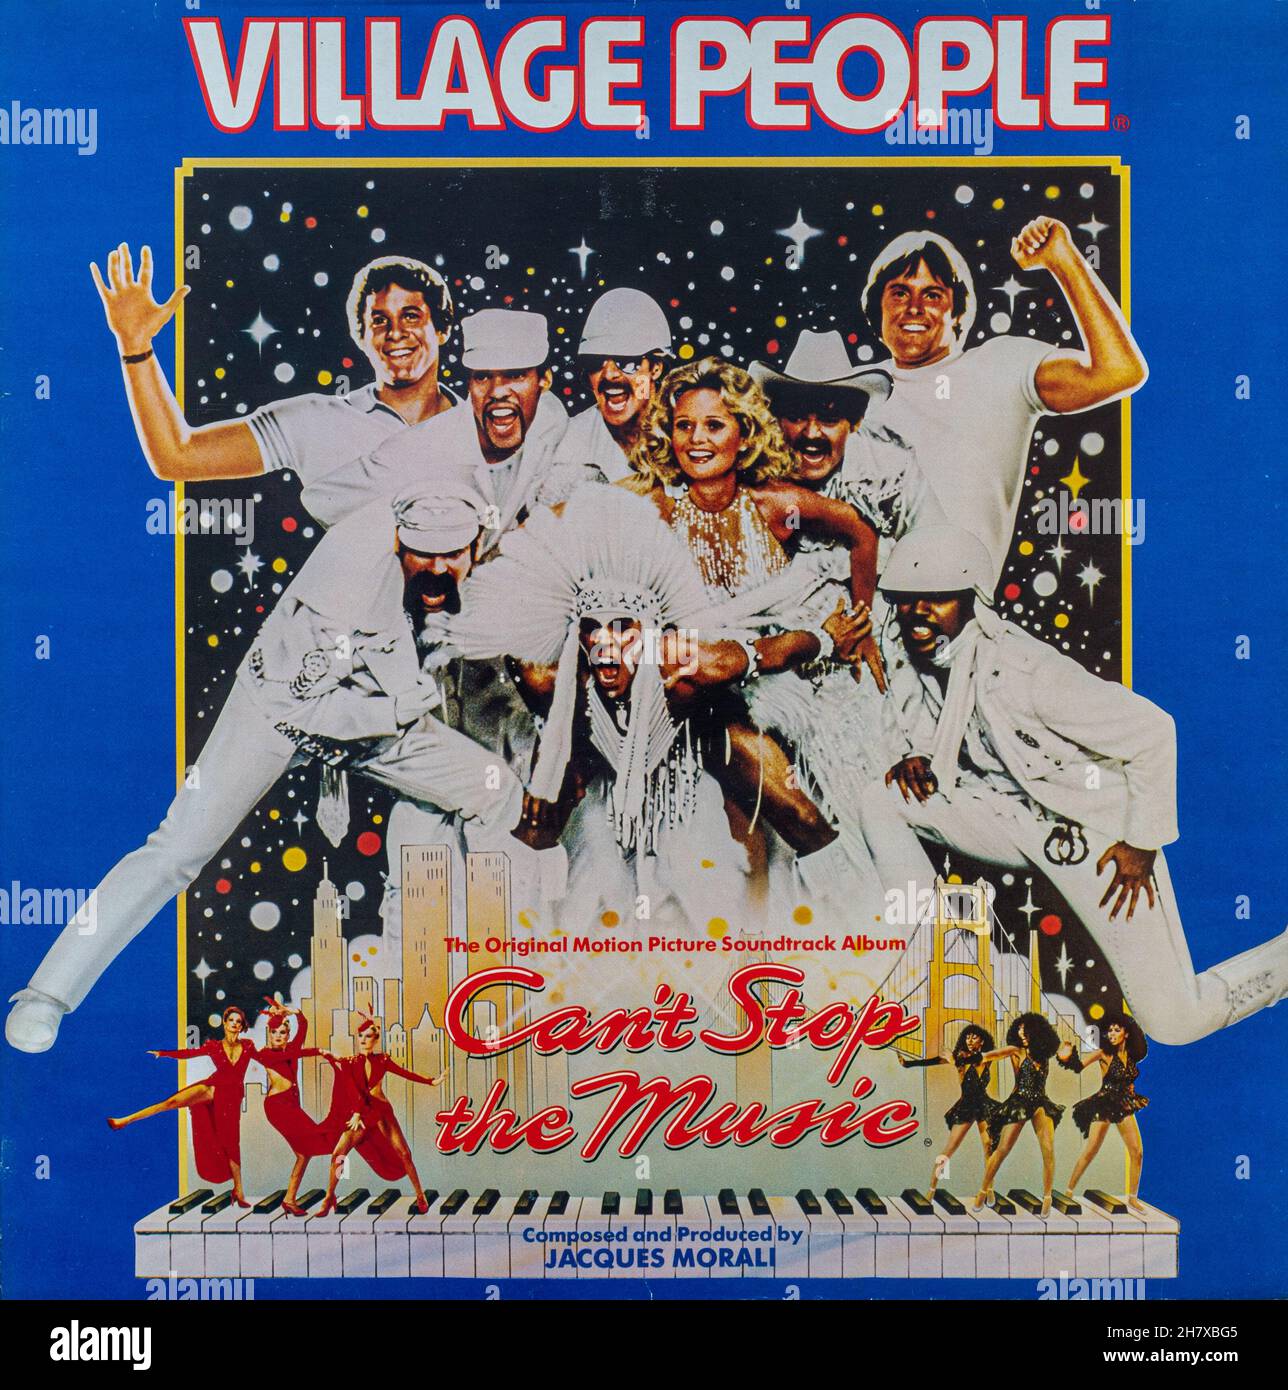 Village People, Can't Stop The Music, 1980 Vinyl-LP-Plattencover, Soundtrack-Album der amerikanischen Disco-Gruppe Stockfoto